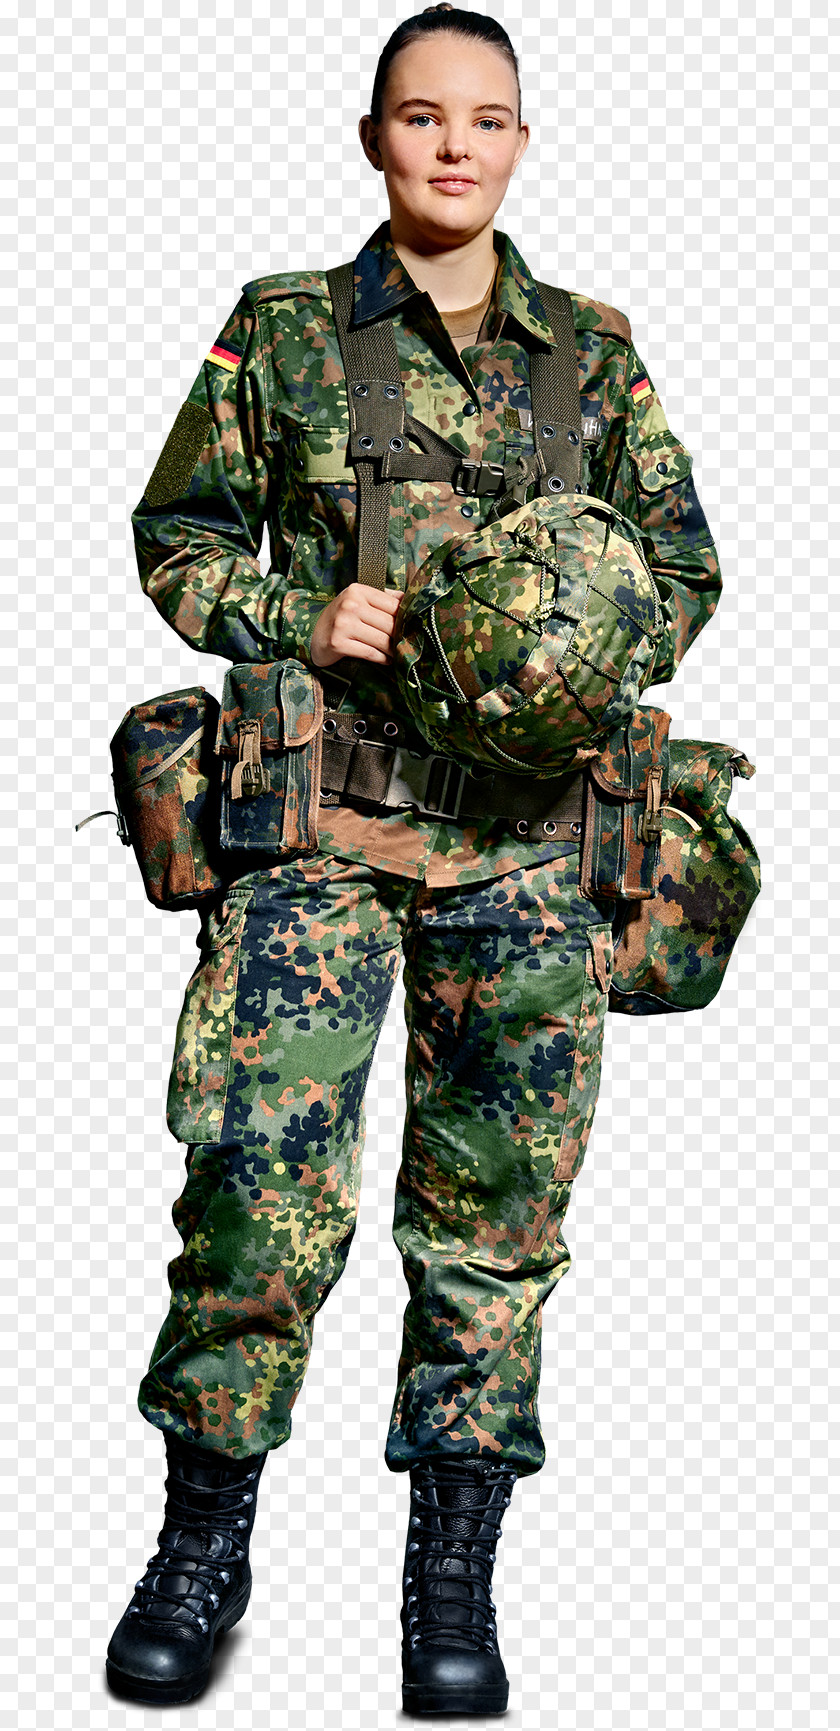 Soldier Die Rekruten Infantry Military Camouflage PNG